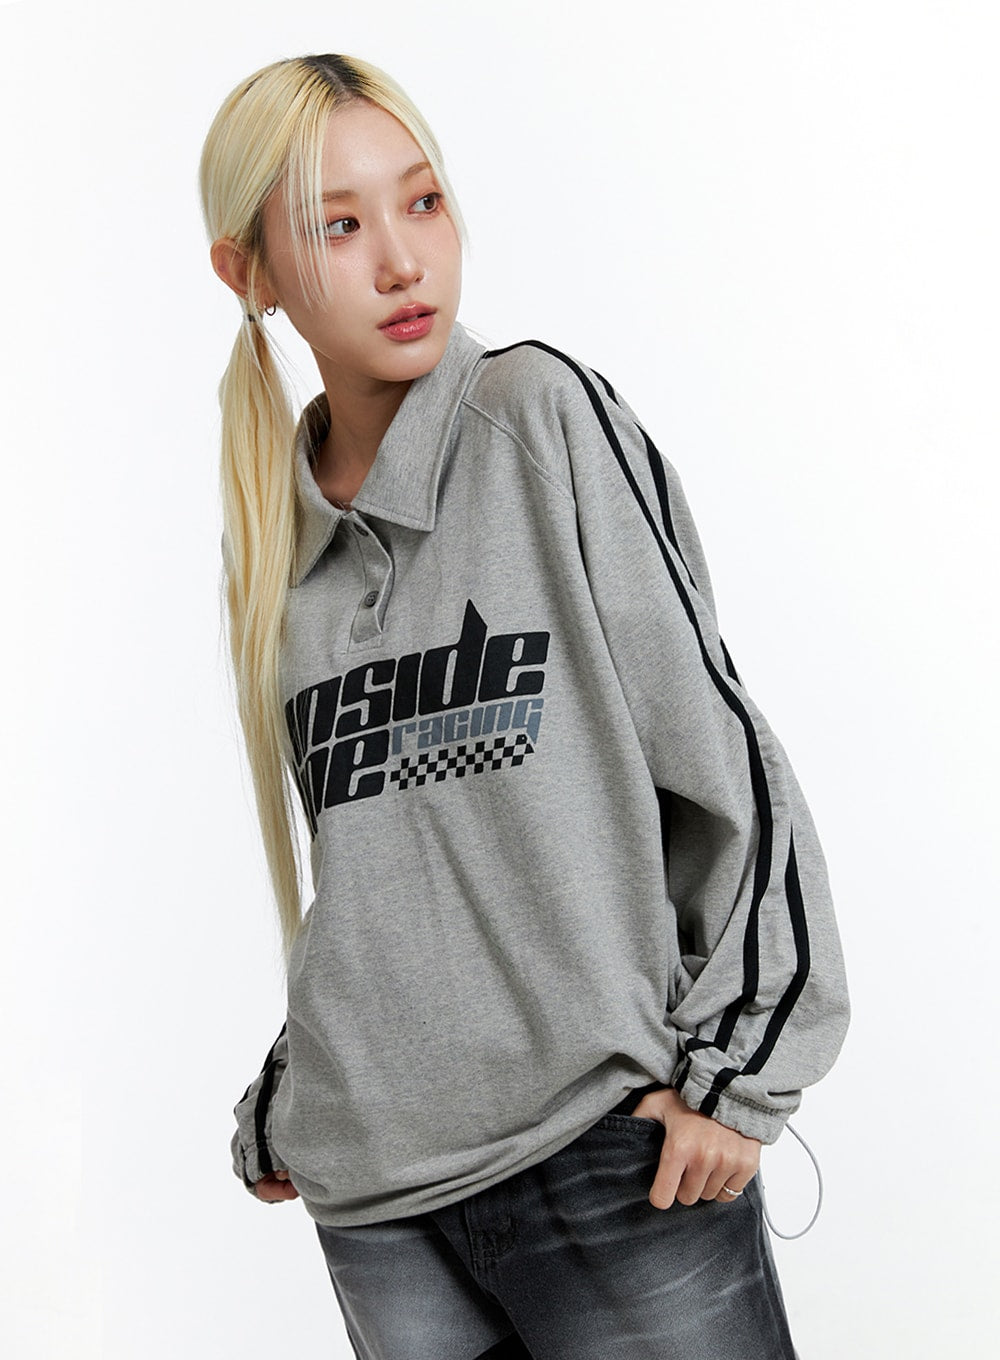 Women's College Graphic Sweatshirt, adidas Originals